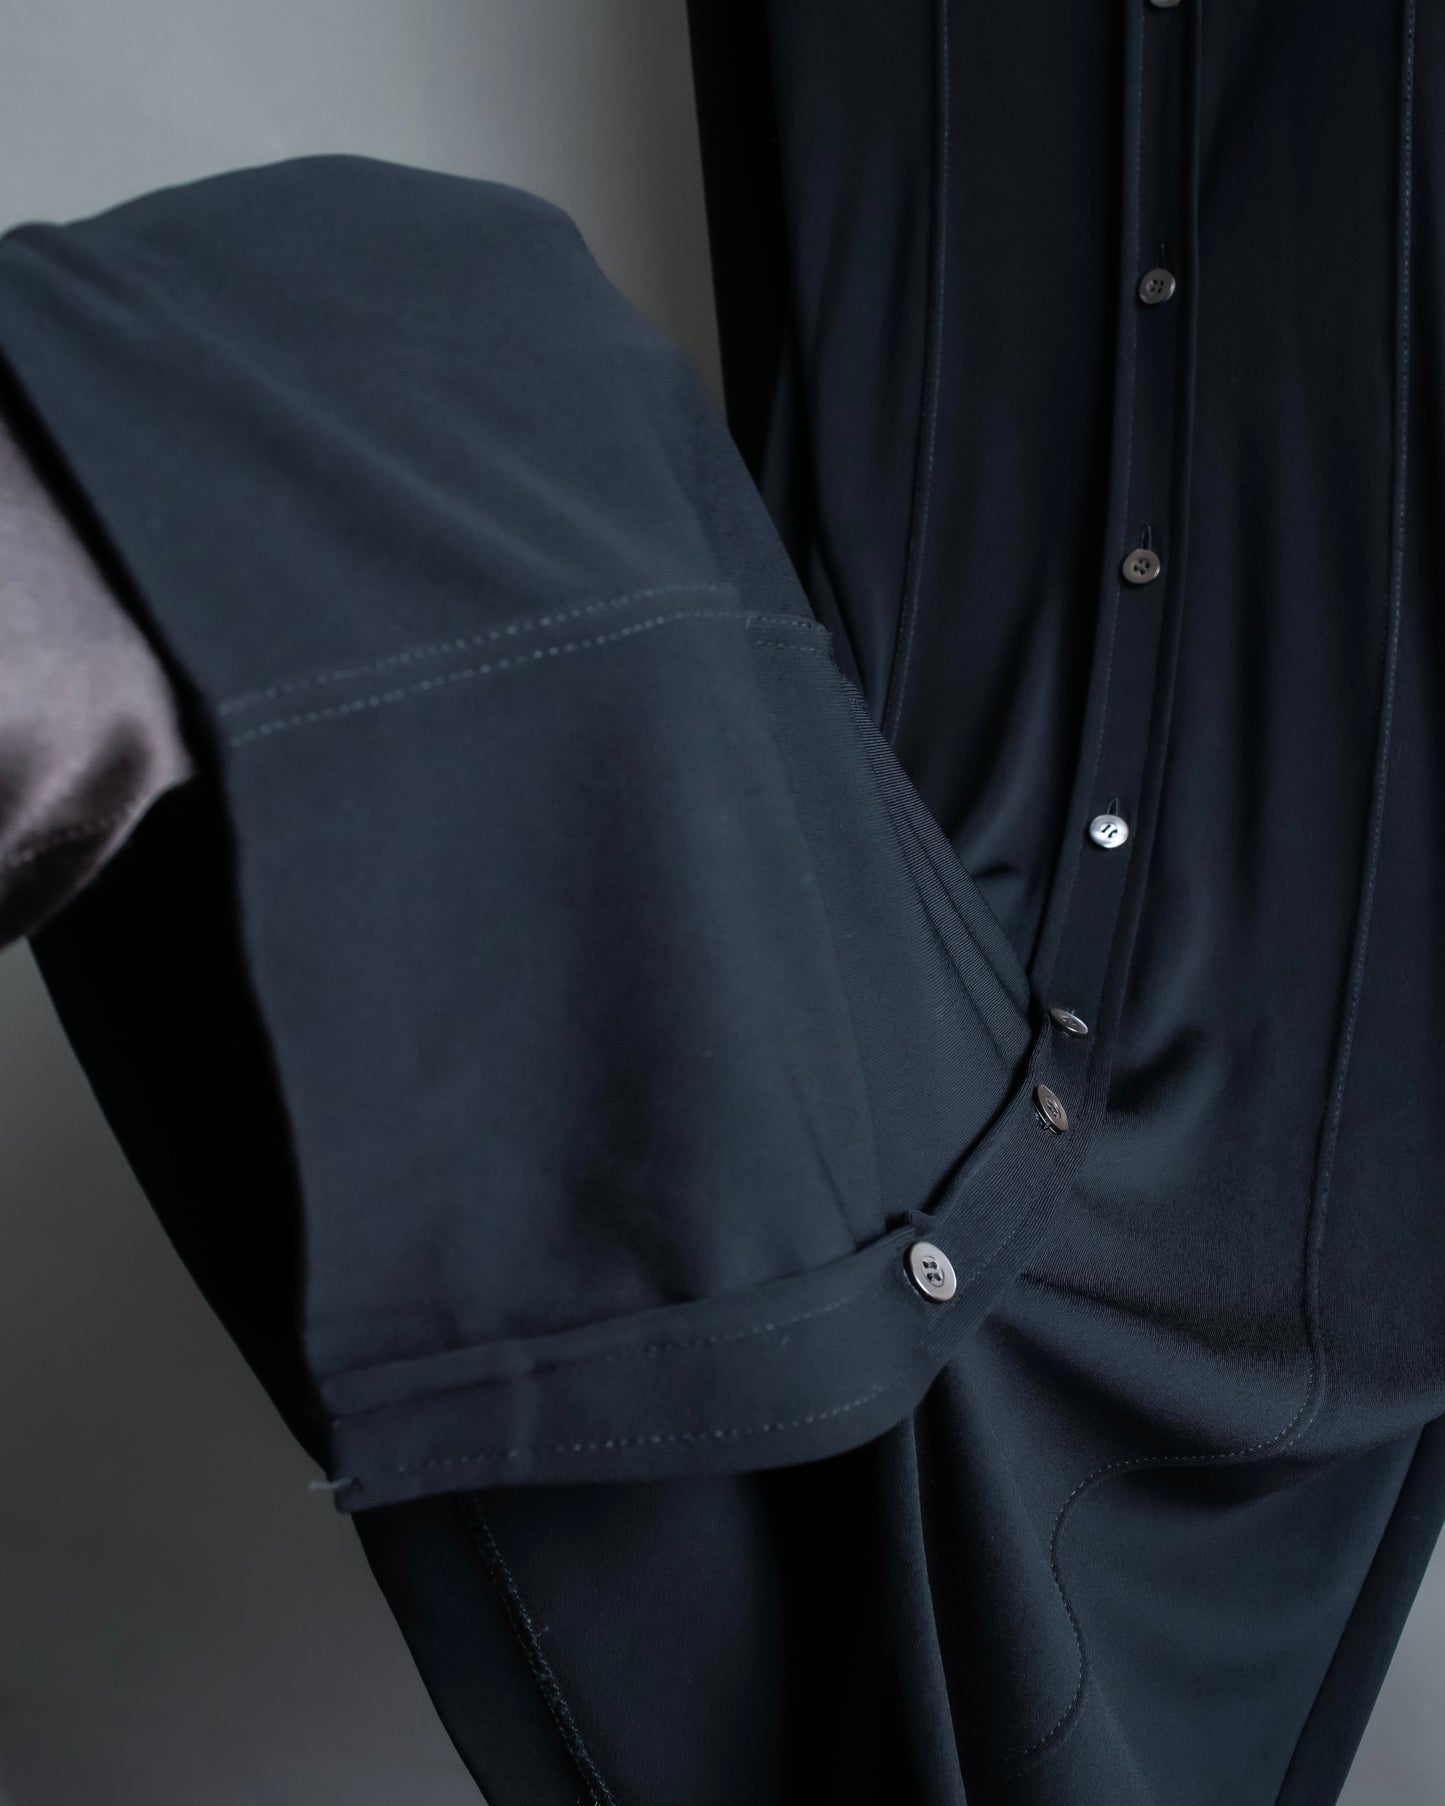 "GUCCI" Drawstring design pintuck long shirt